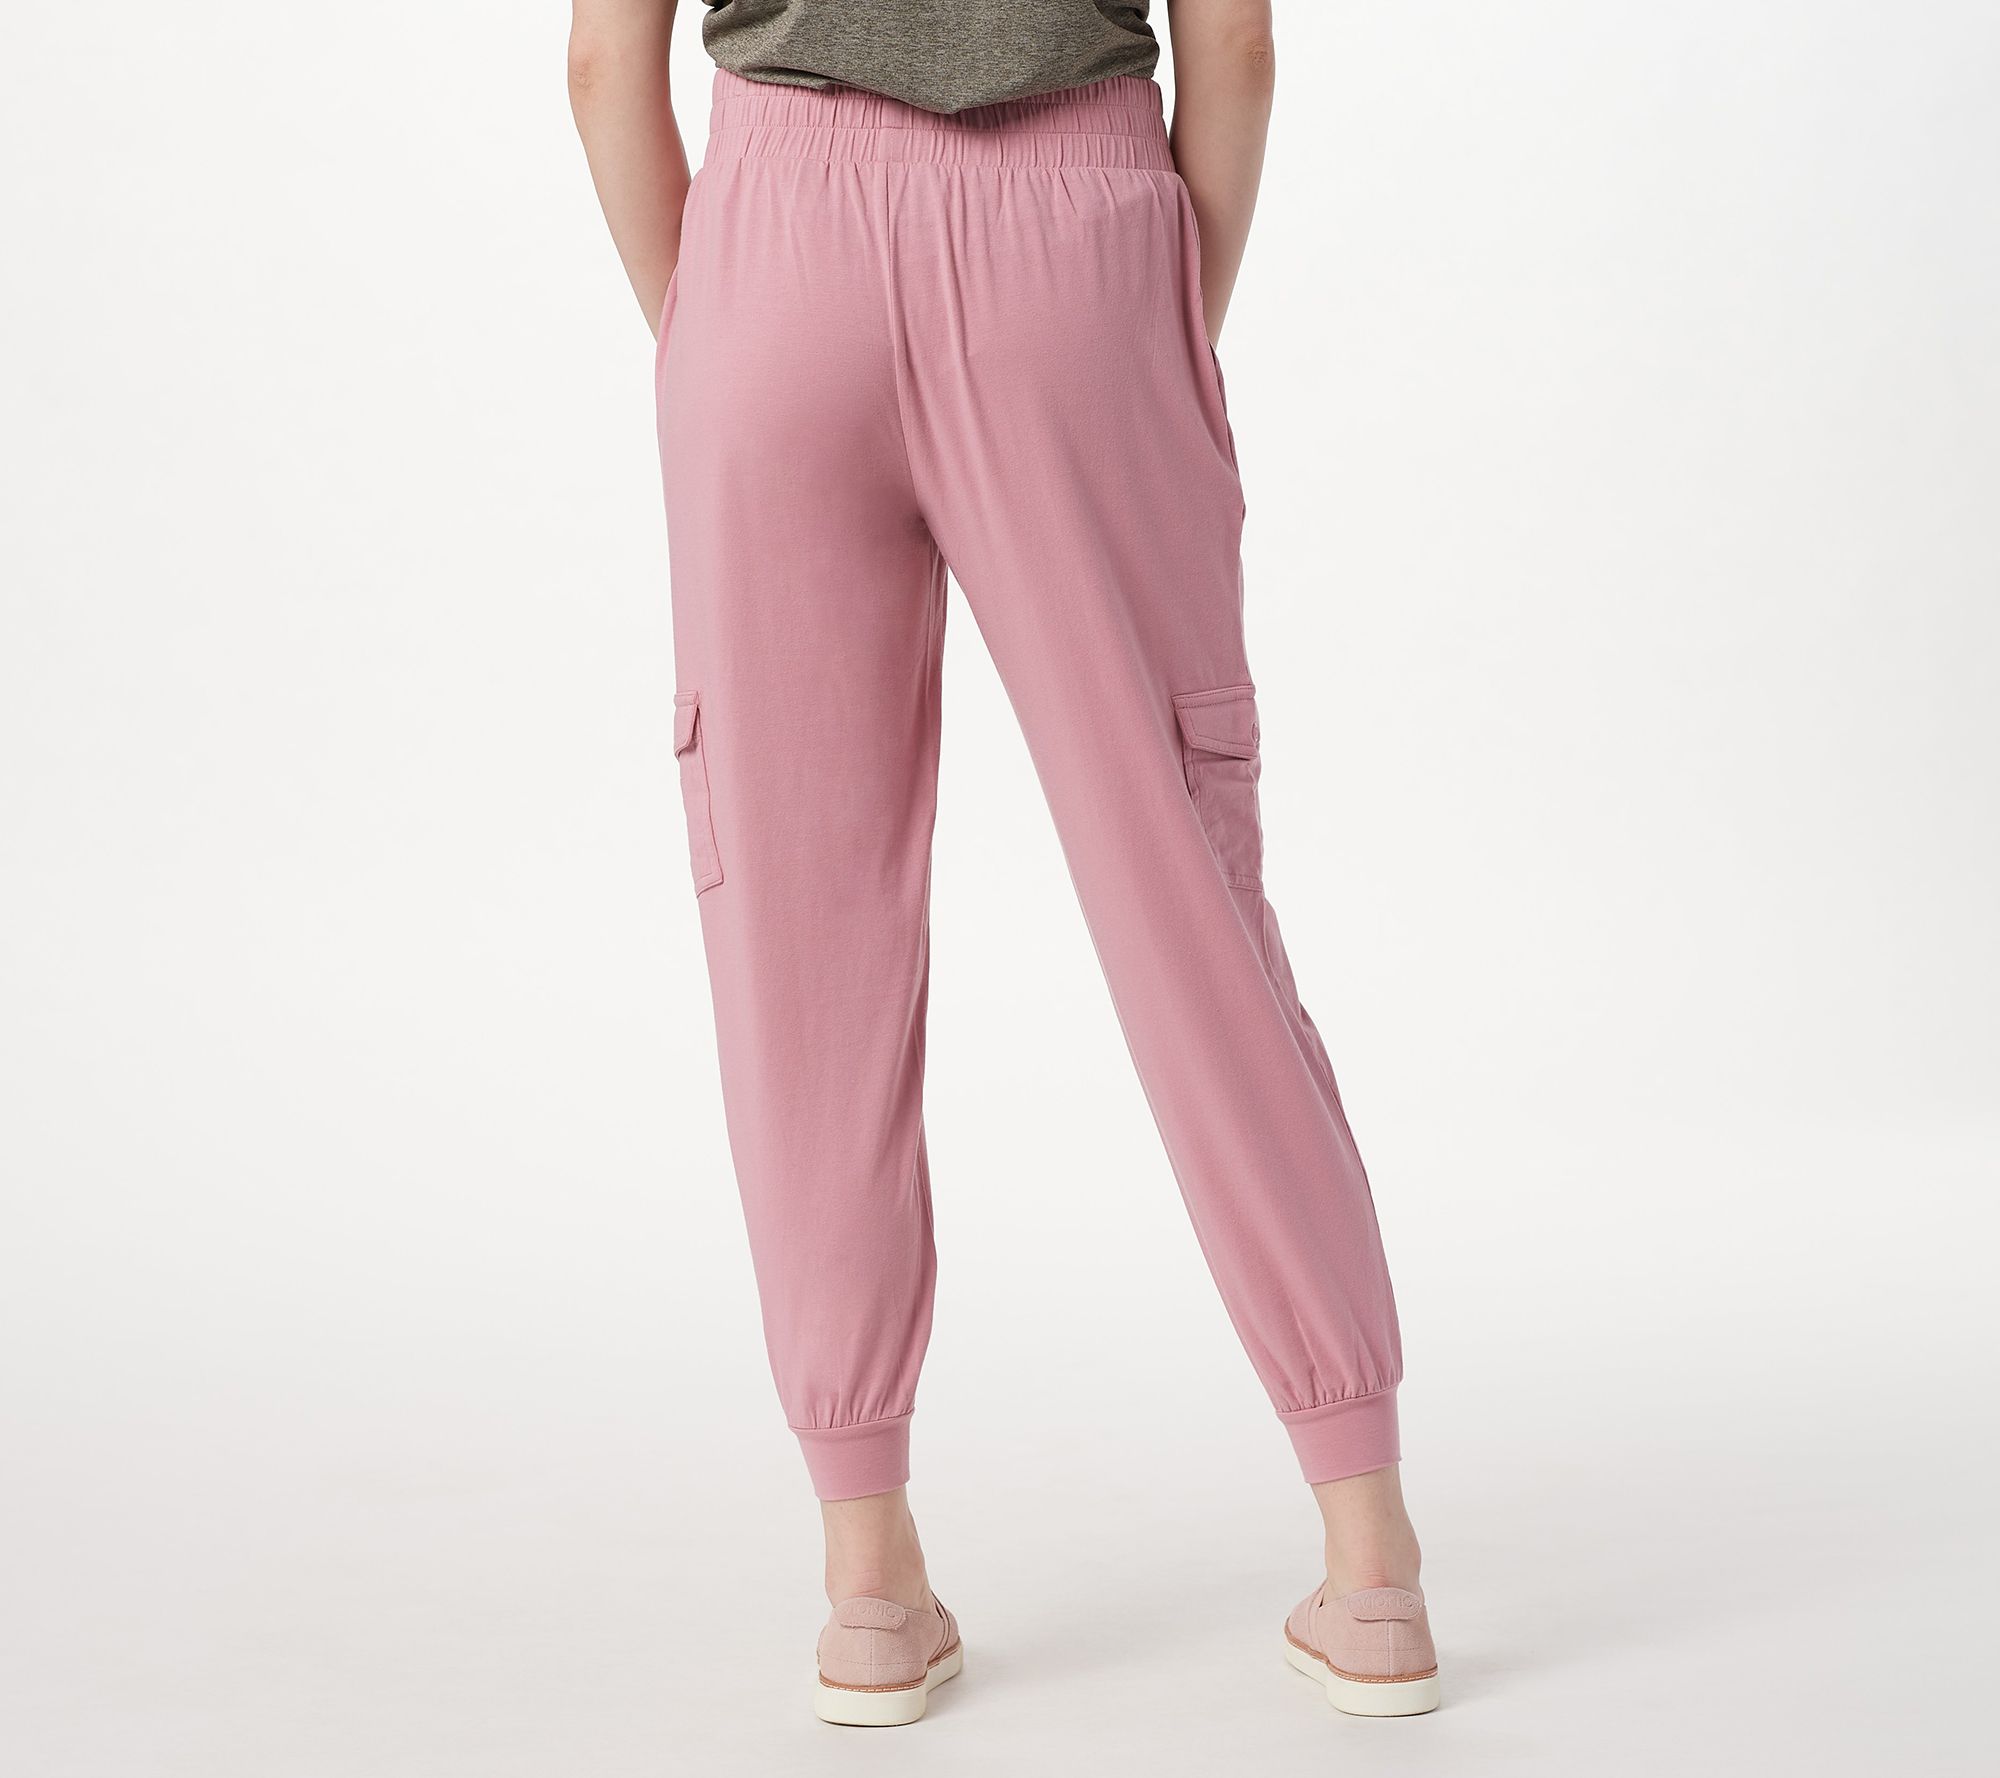 AnyBody Loungewear Women's Petite Cozy Knit Crop Jogger Pants Black PS Size QVC 